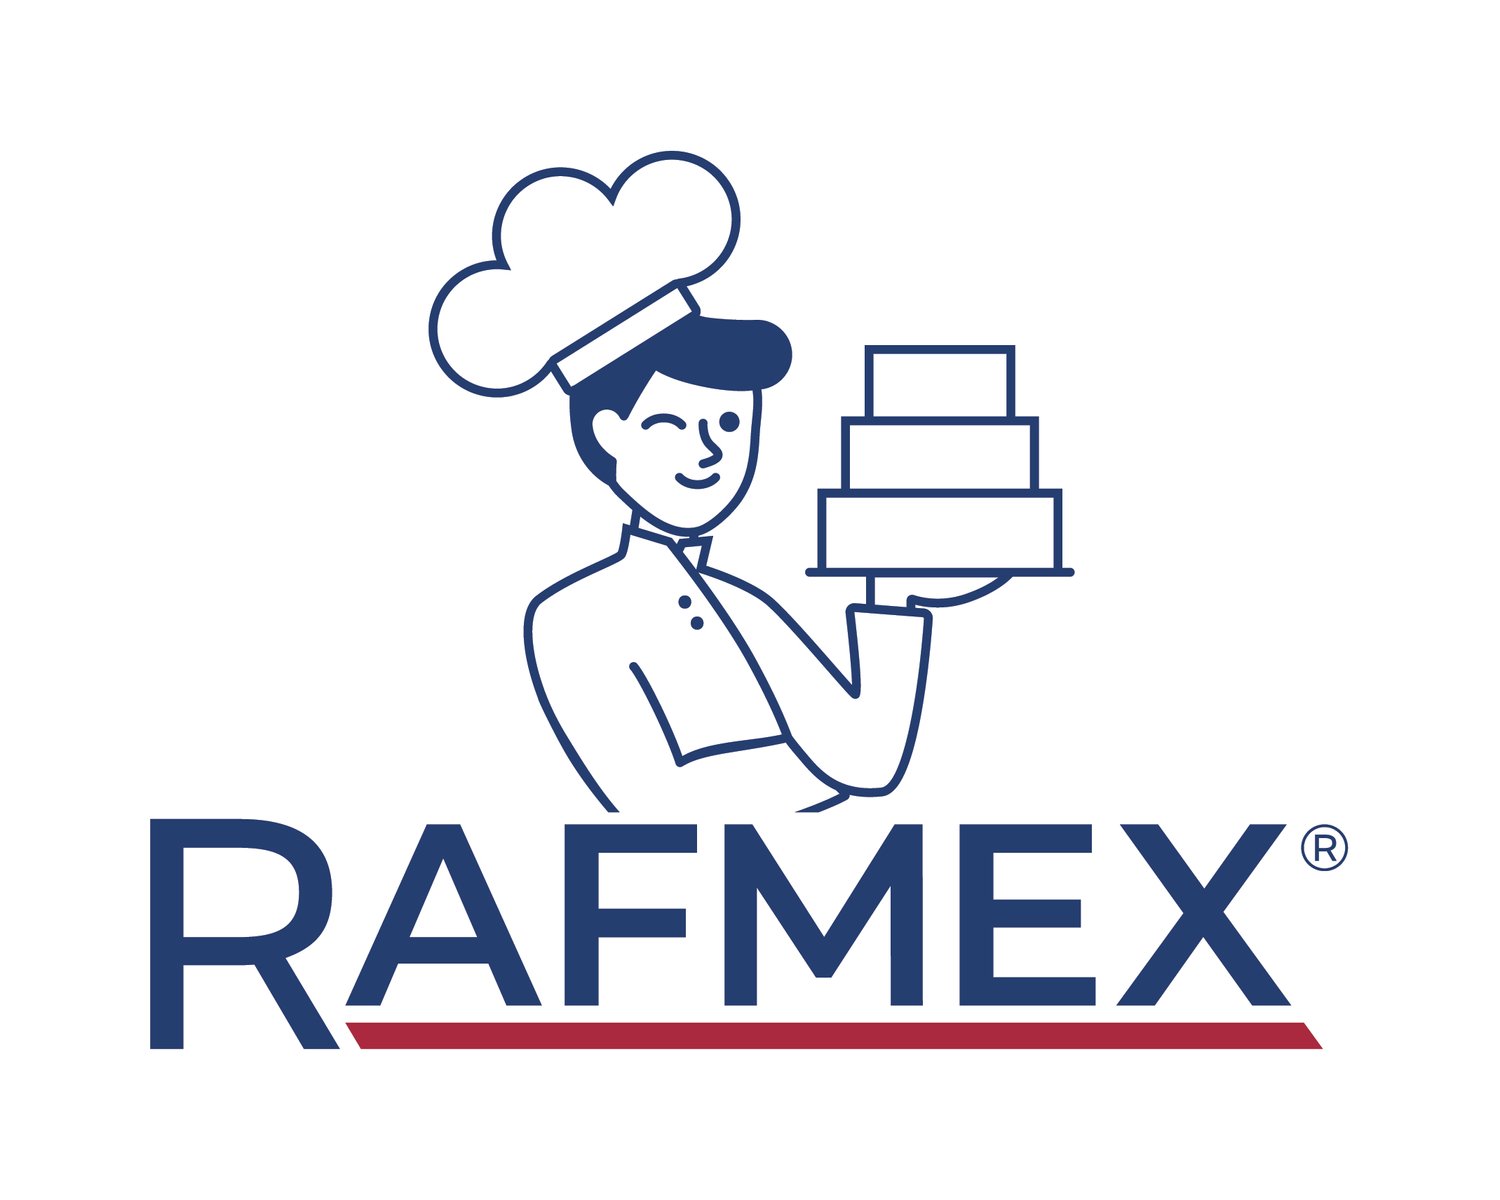 Rafmex